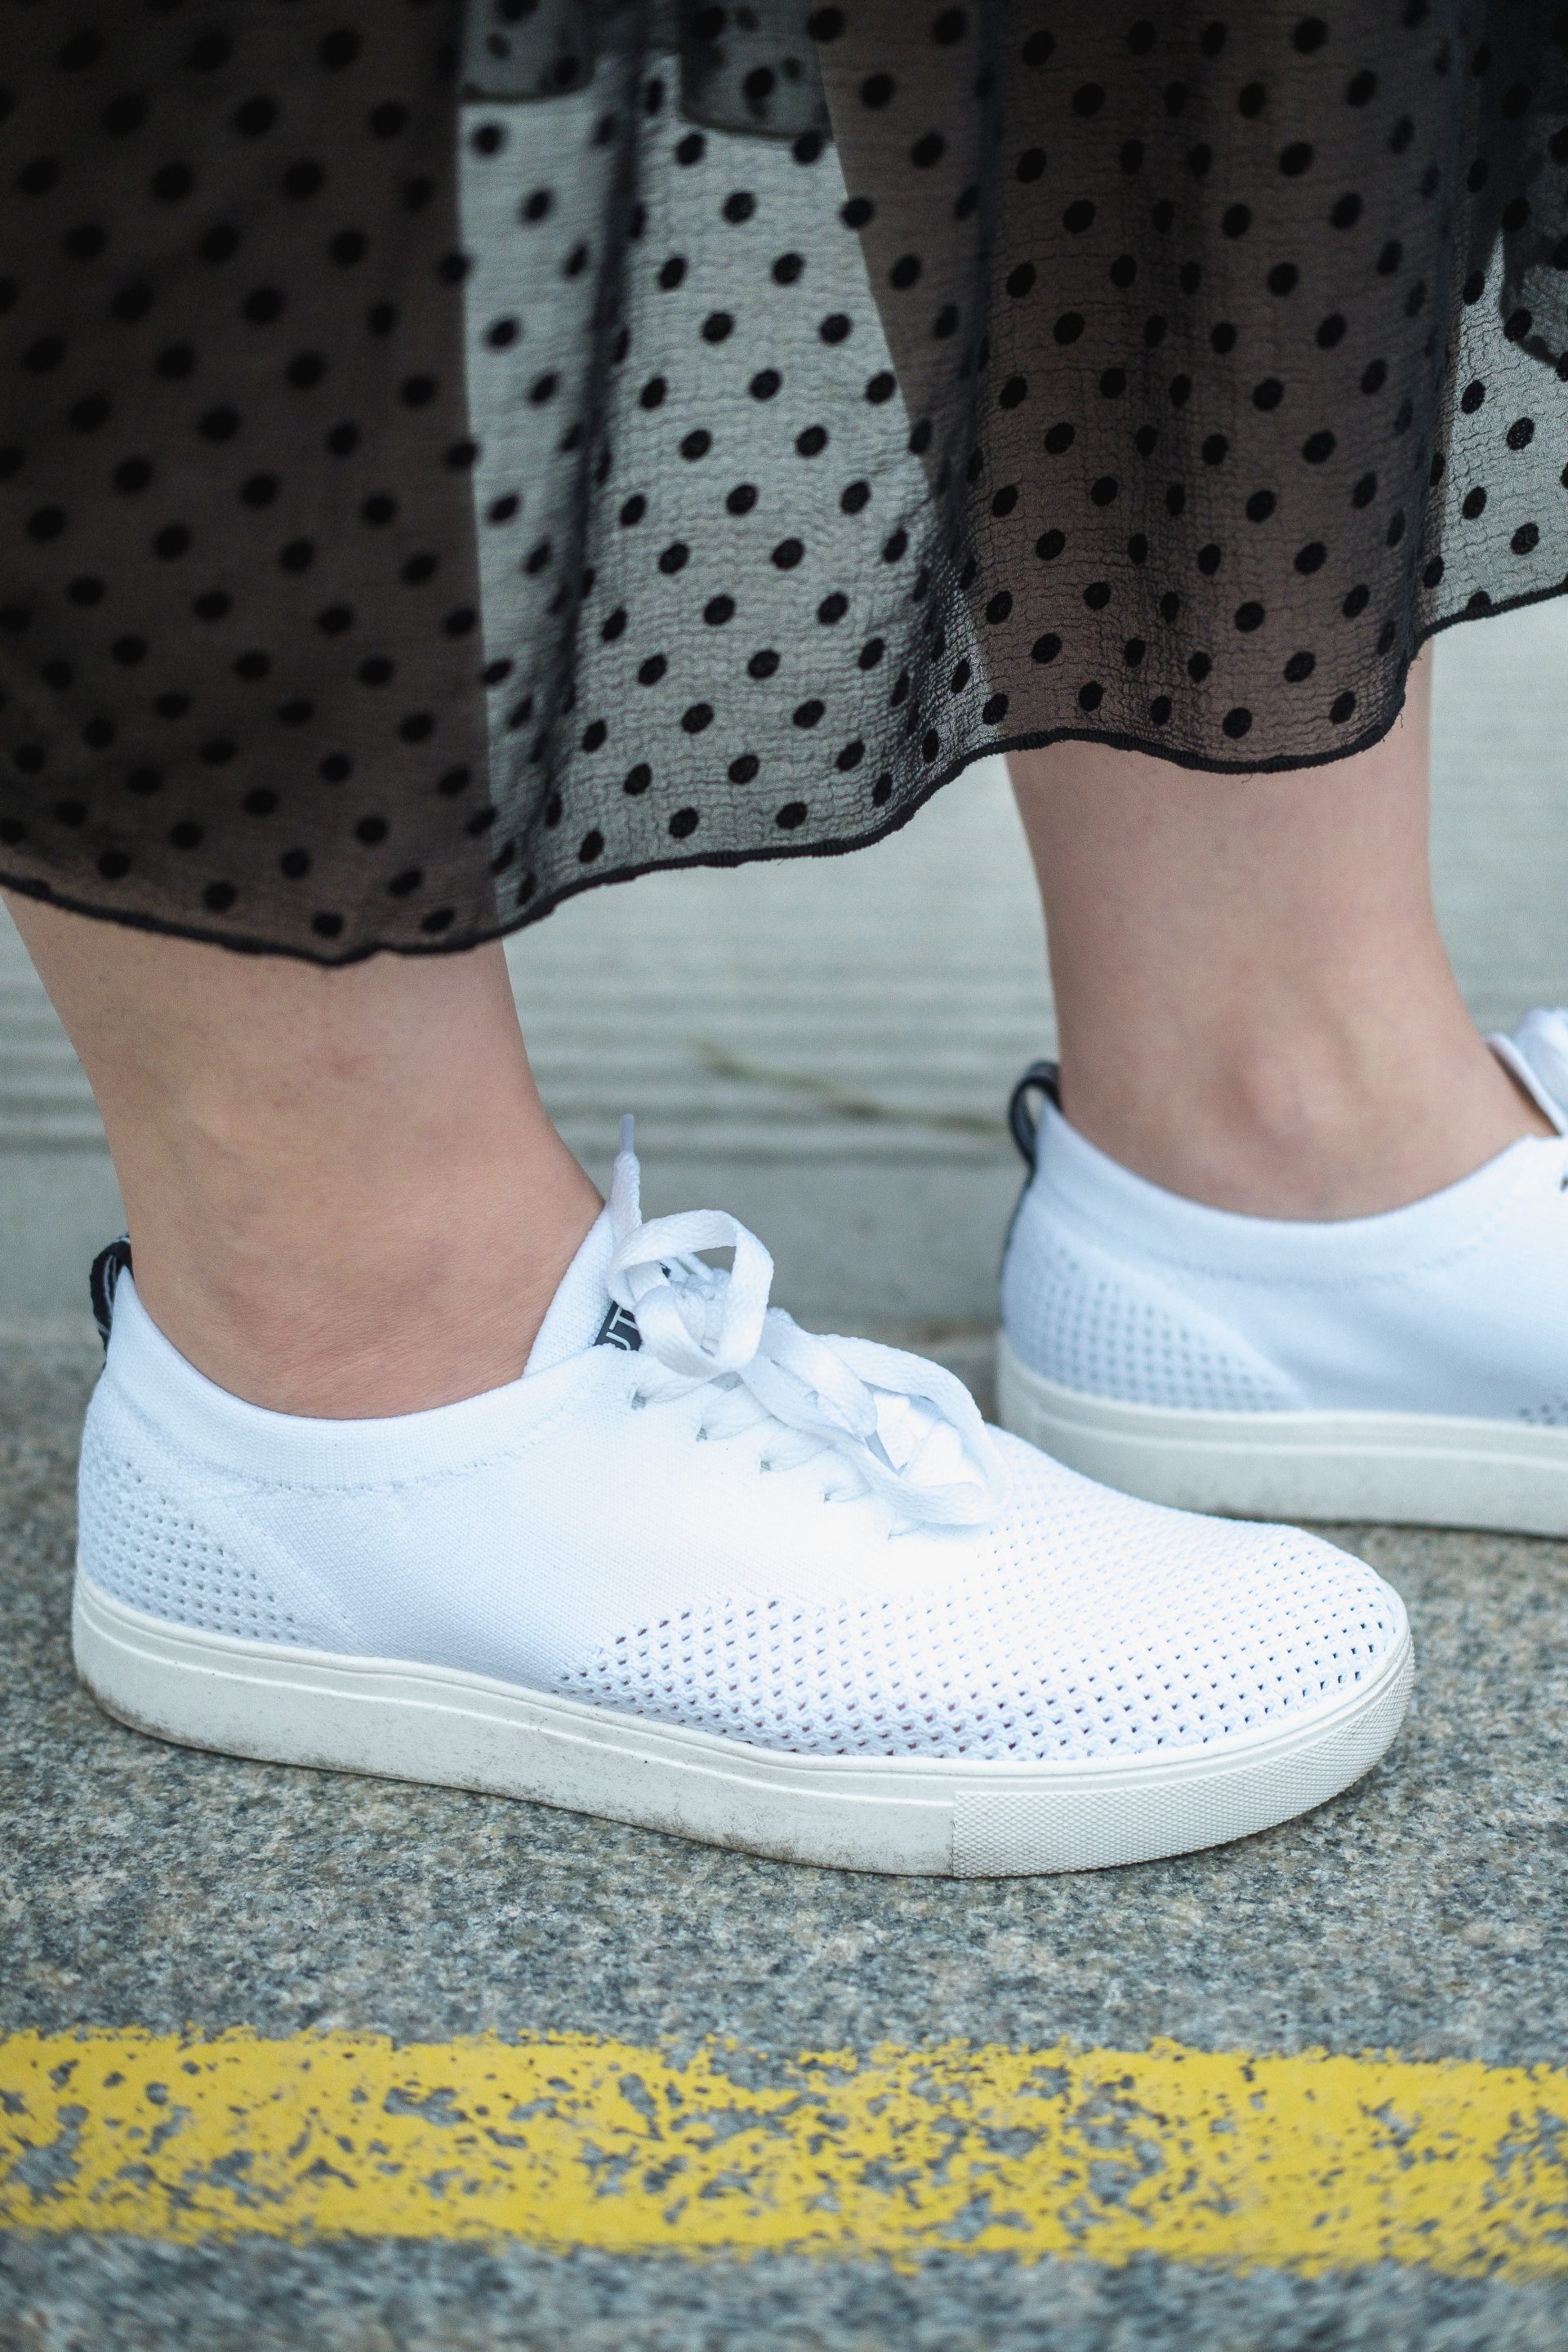 How to Style White Sneakers | White Nautica Shoes